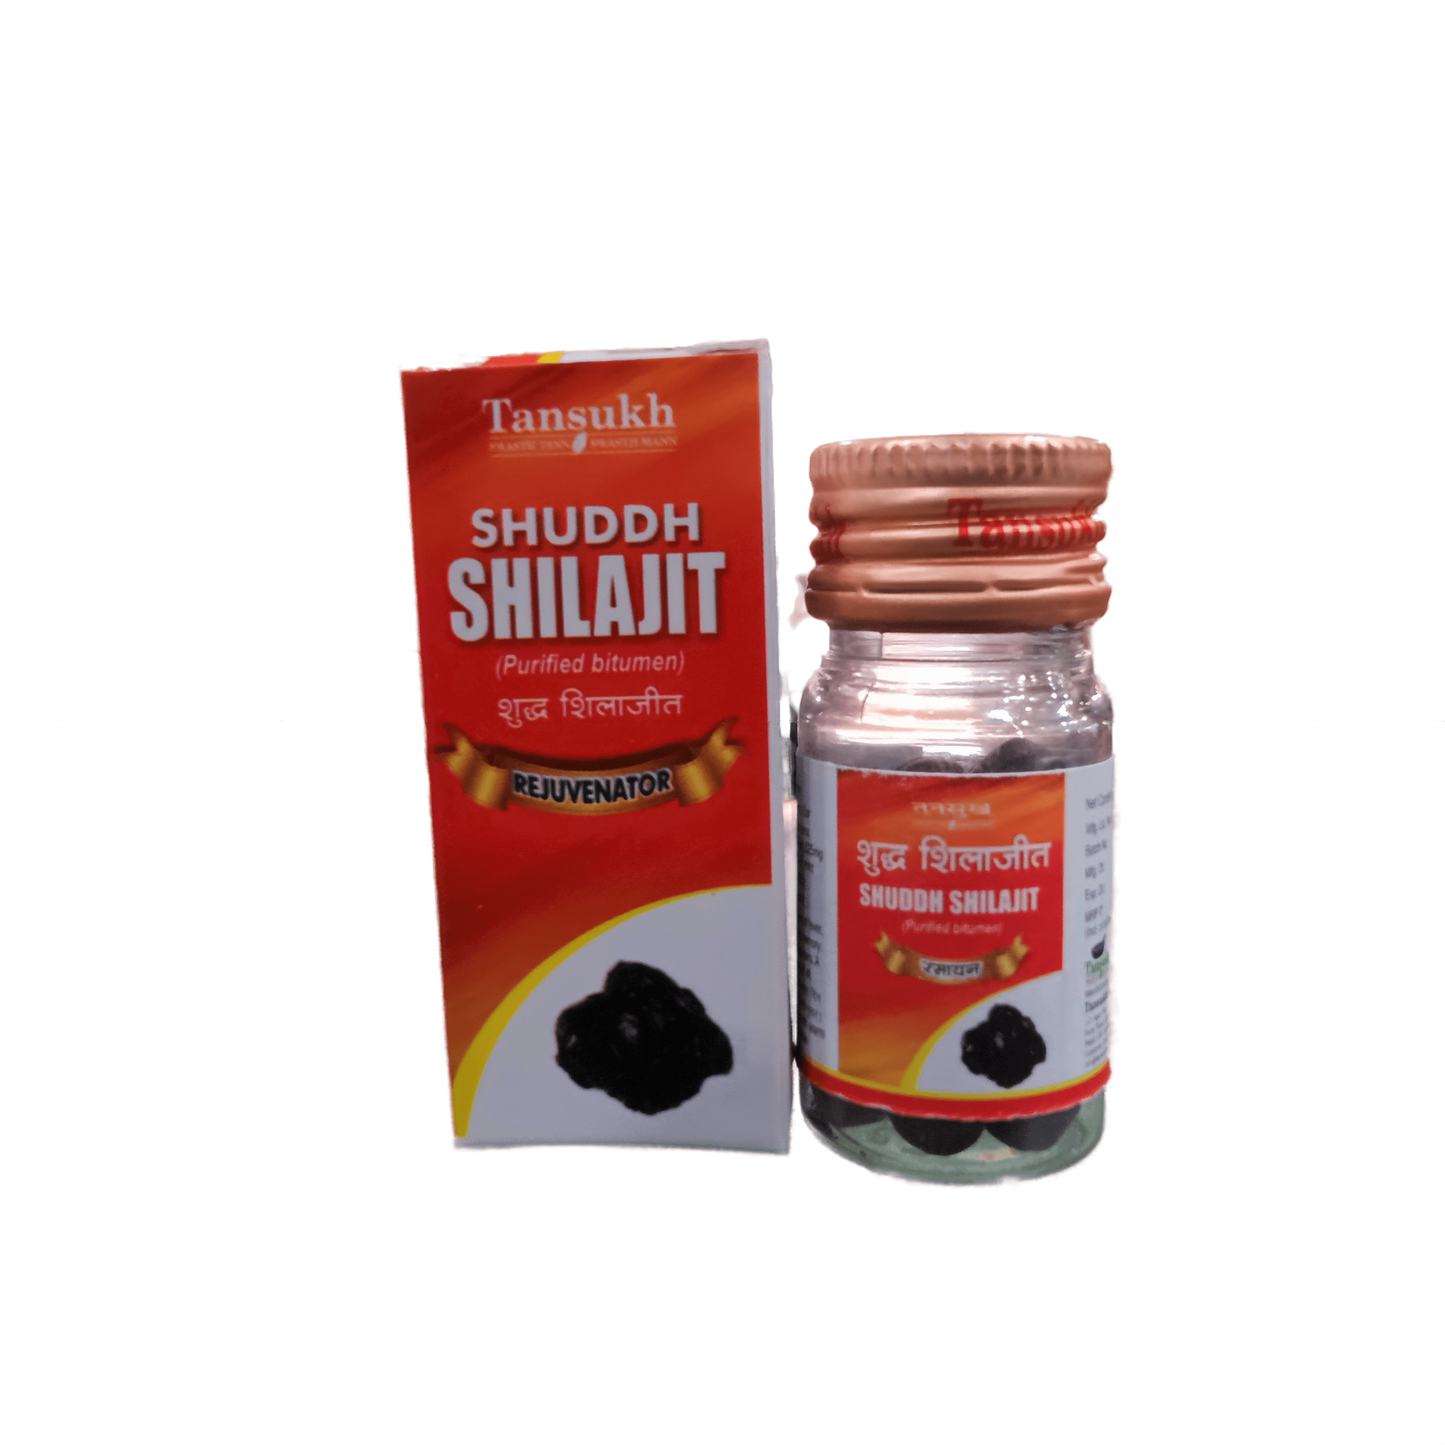 Shuddh Shilajit Tablets